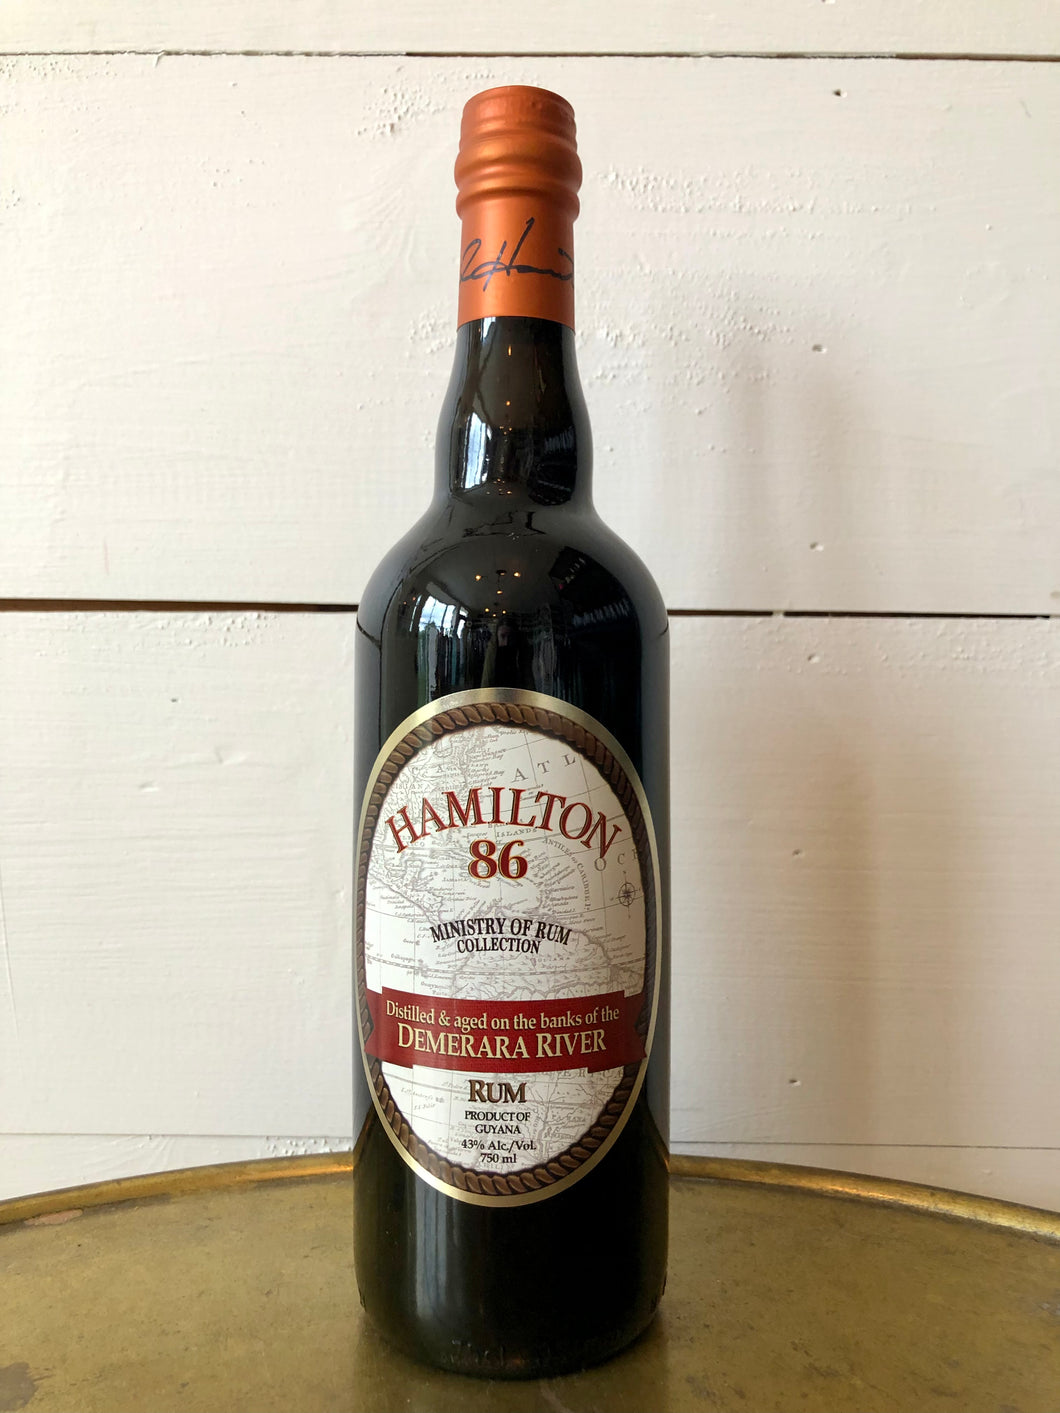 Hamilton 86 Demerara Rum